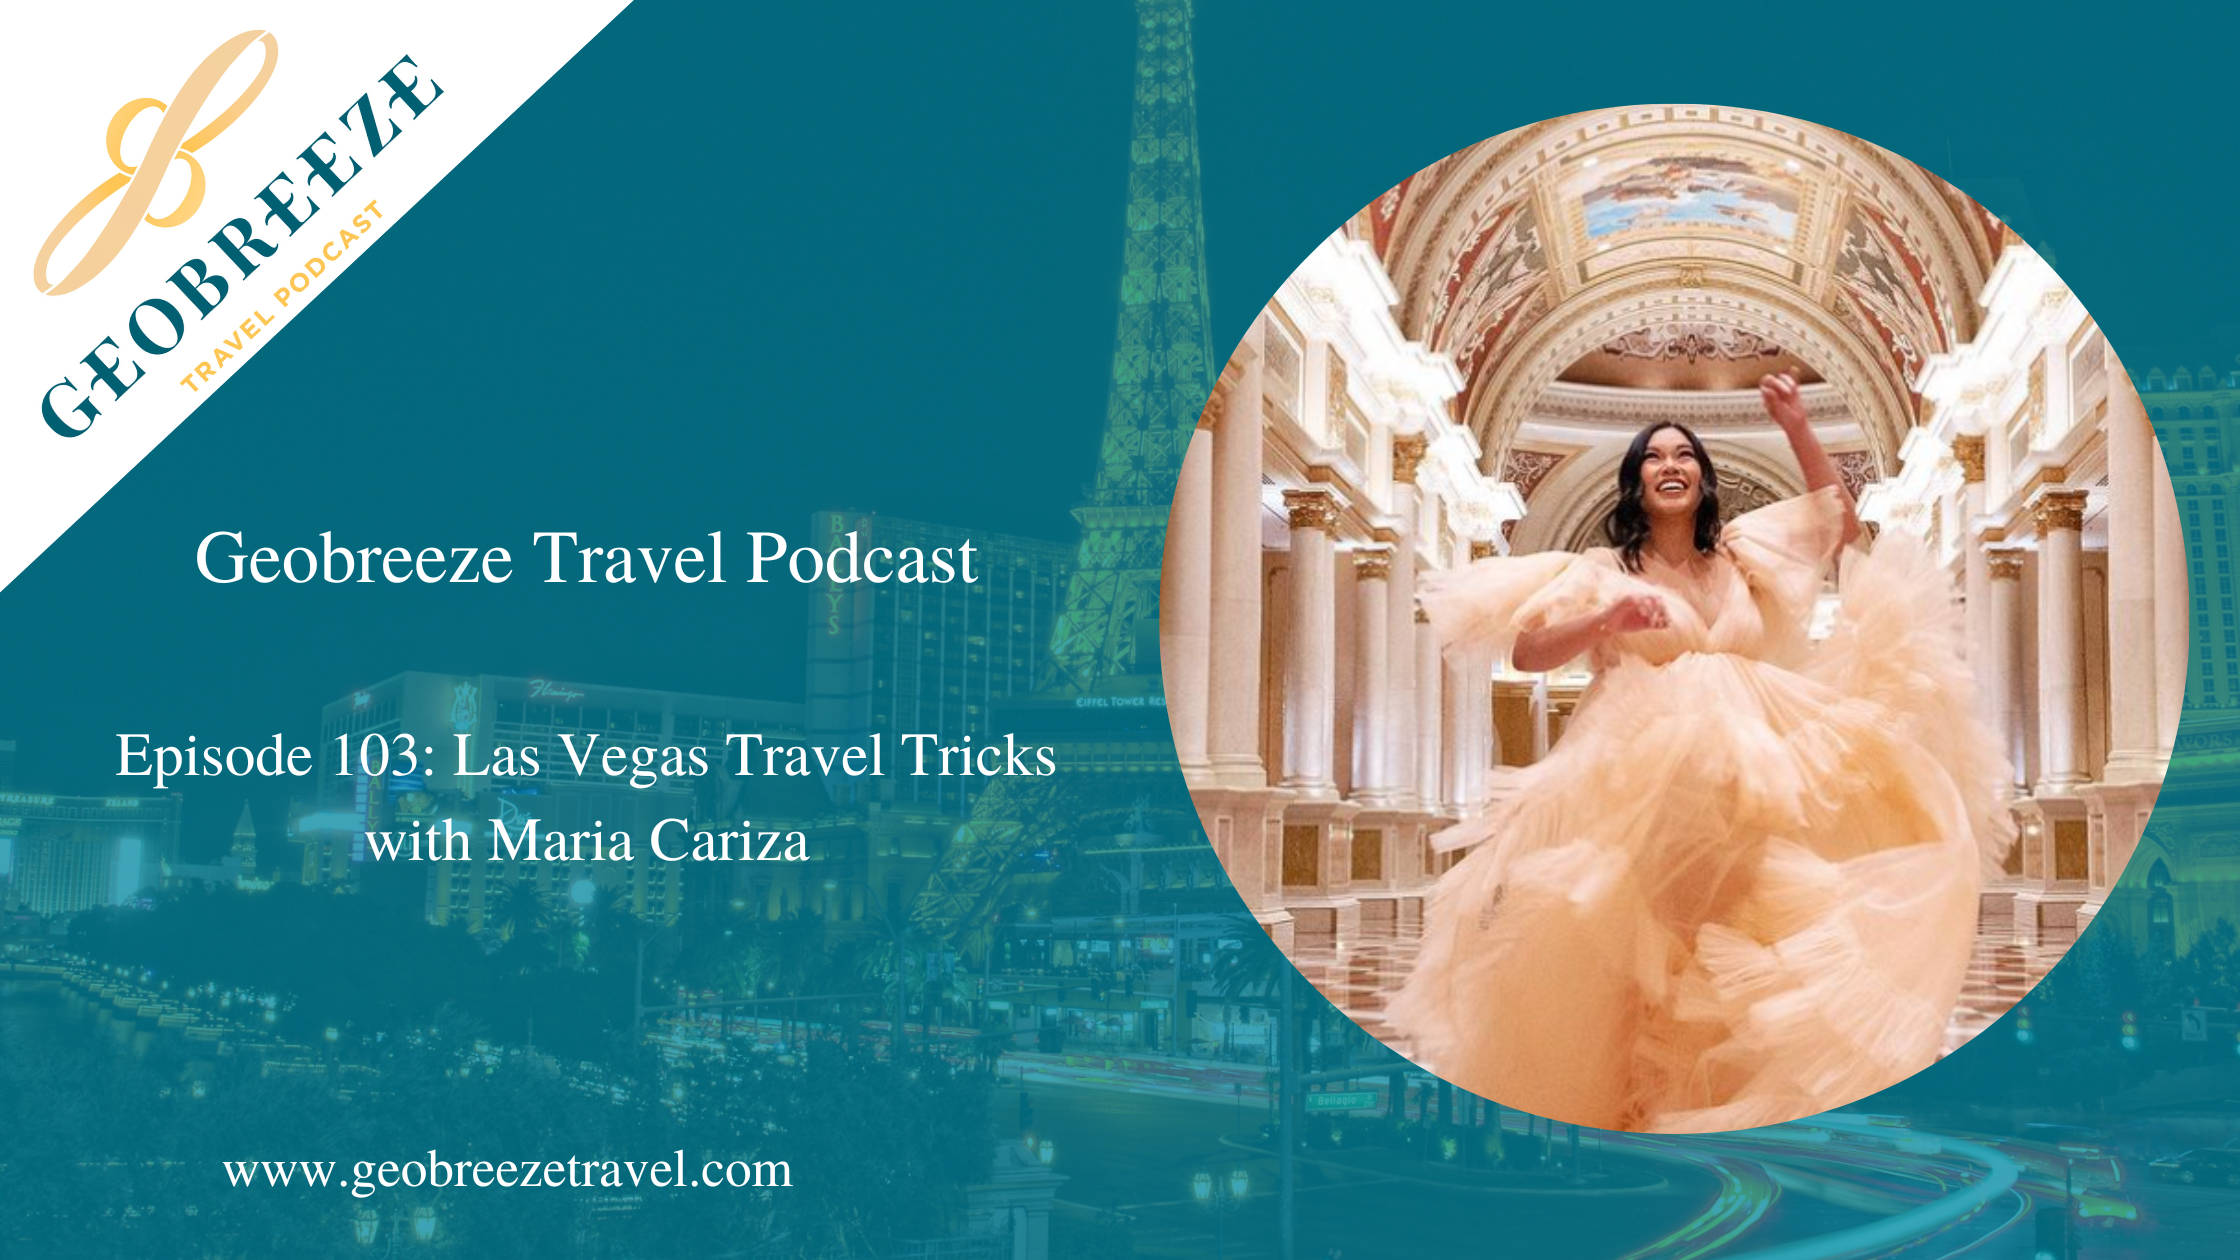 Episode 103: Las Vegas Travel Tricks with Maria Cariza